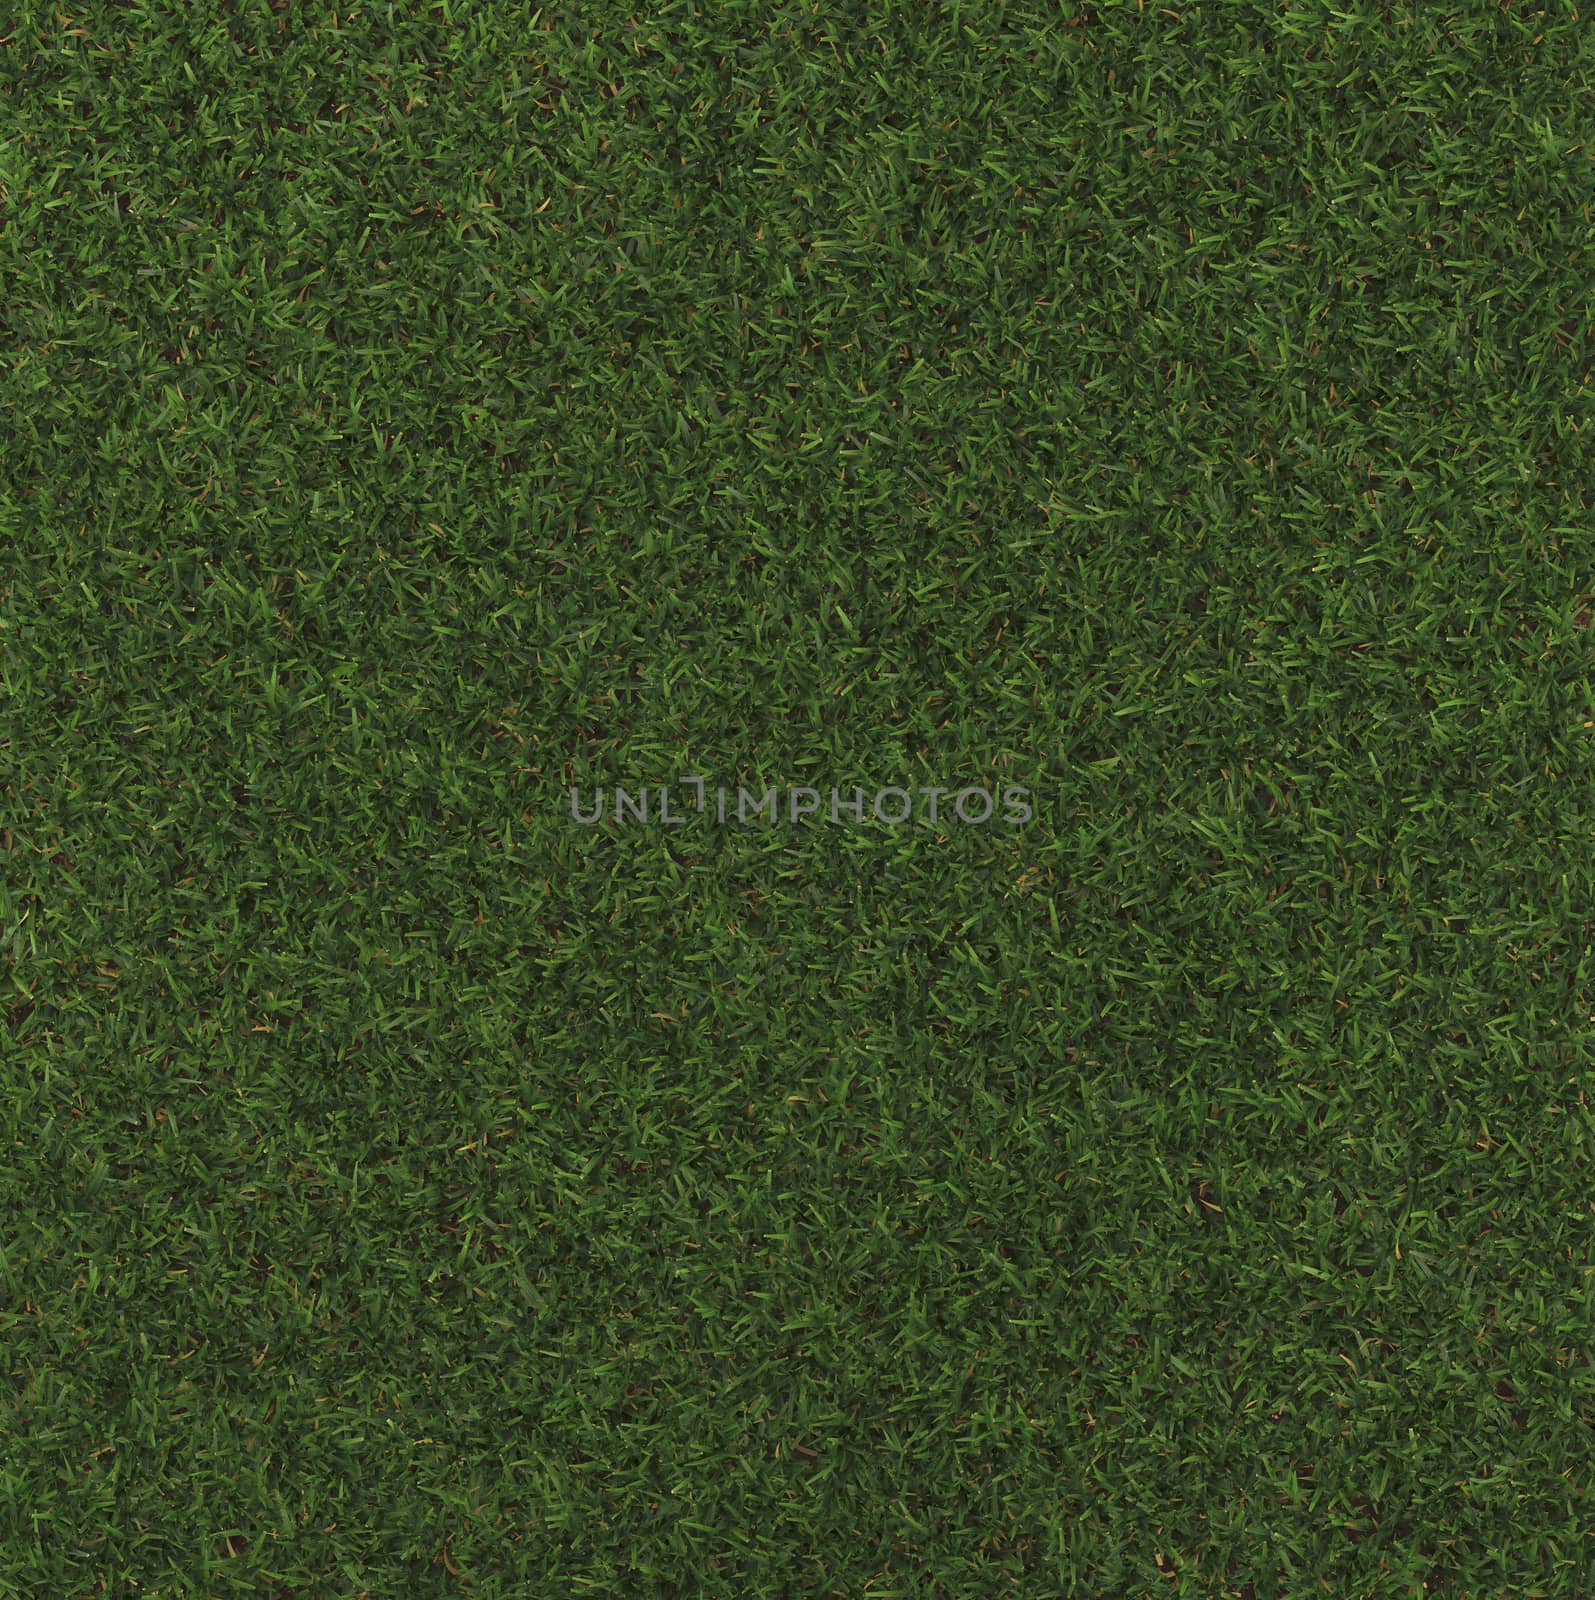 Perfect Grass by vitanovski